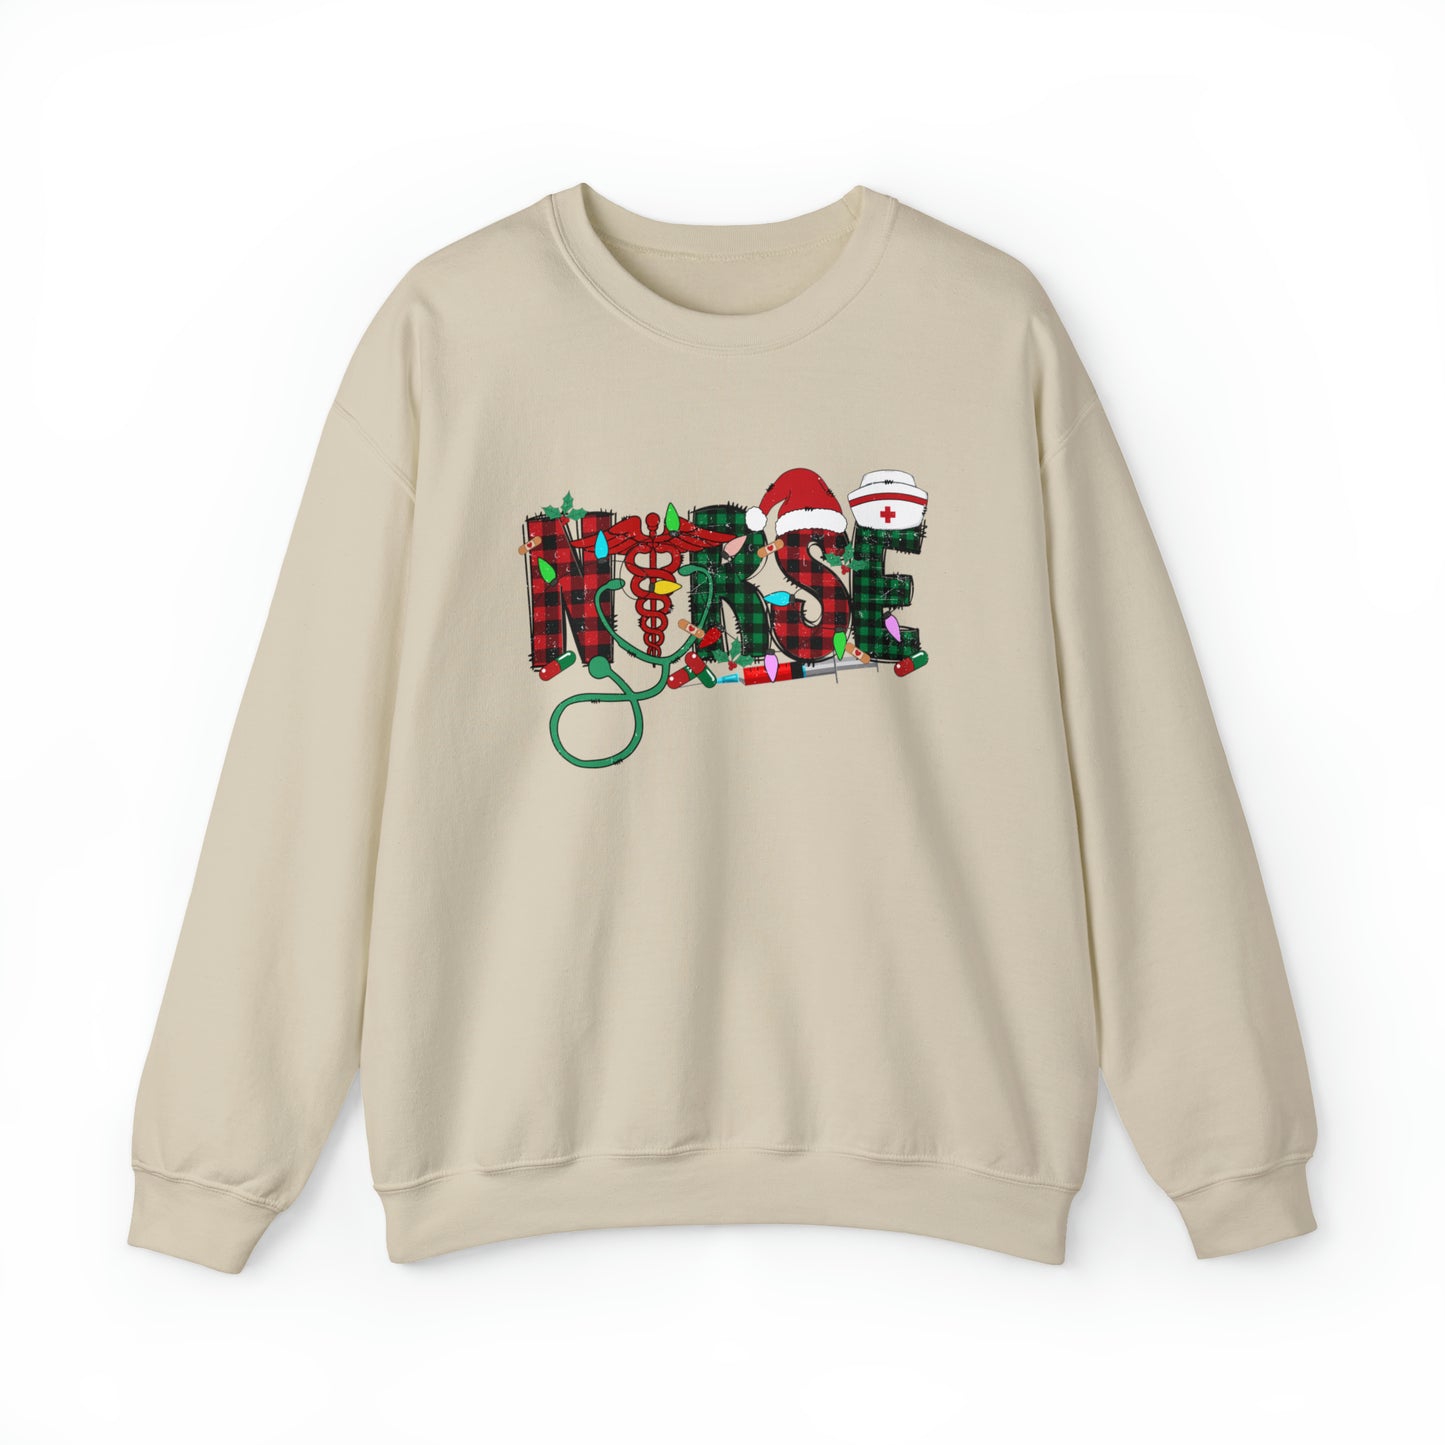 Nurse Christmas Sweatshirt, Nurse Holiday Shirt, RN Cozy Winter Holiday Sweater, Sweatshirt with Retro Nurse Design, Nurse Christmas Gift - Teez Closet